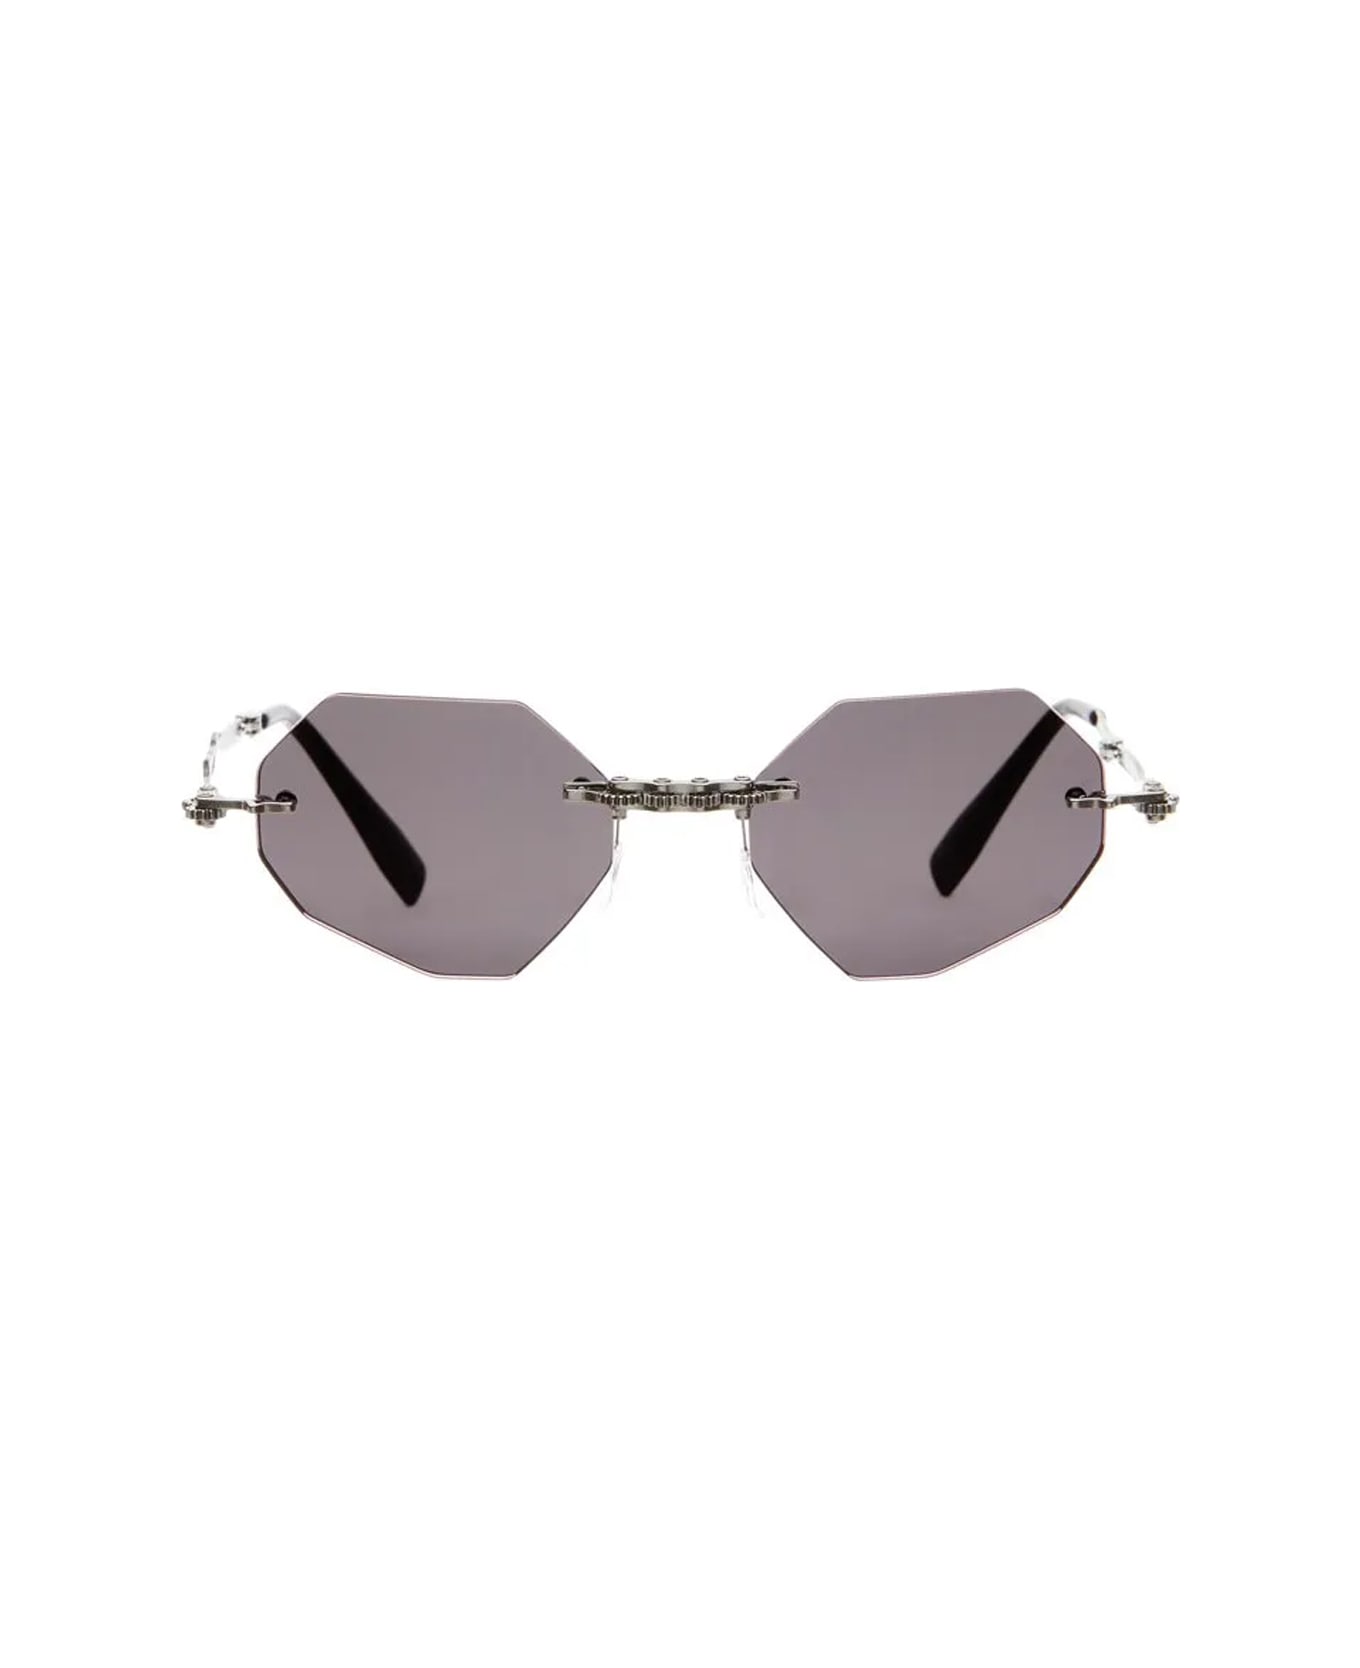 Kuboraum Maske H44 Machinery Rimless Series Bb Grey Sunglasses - Argento